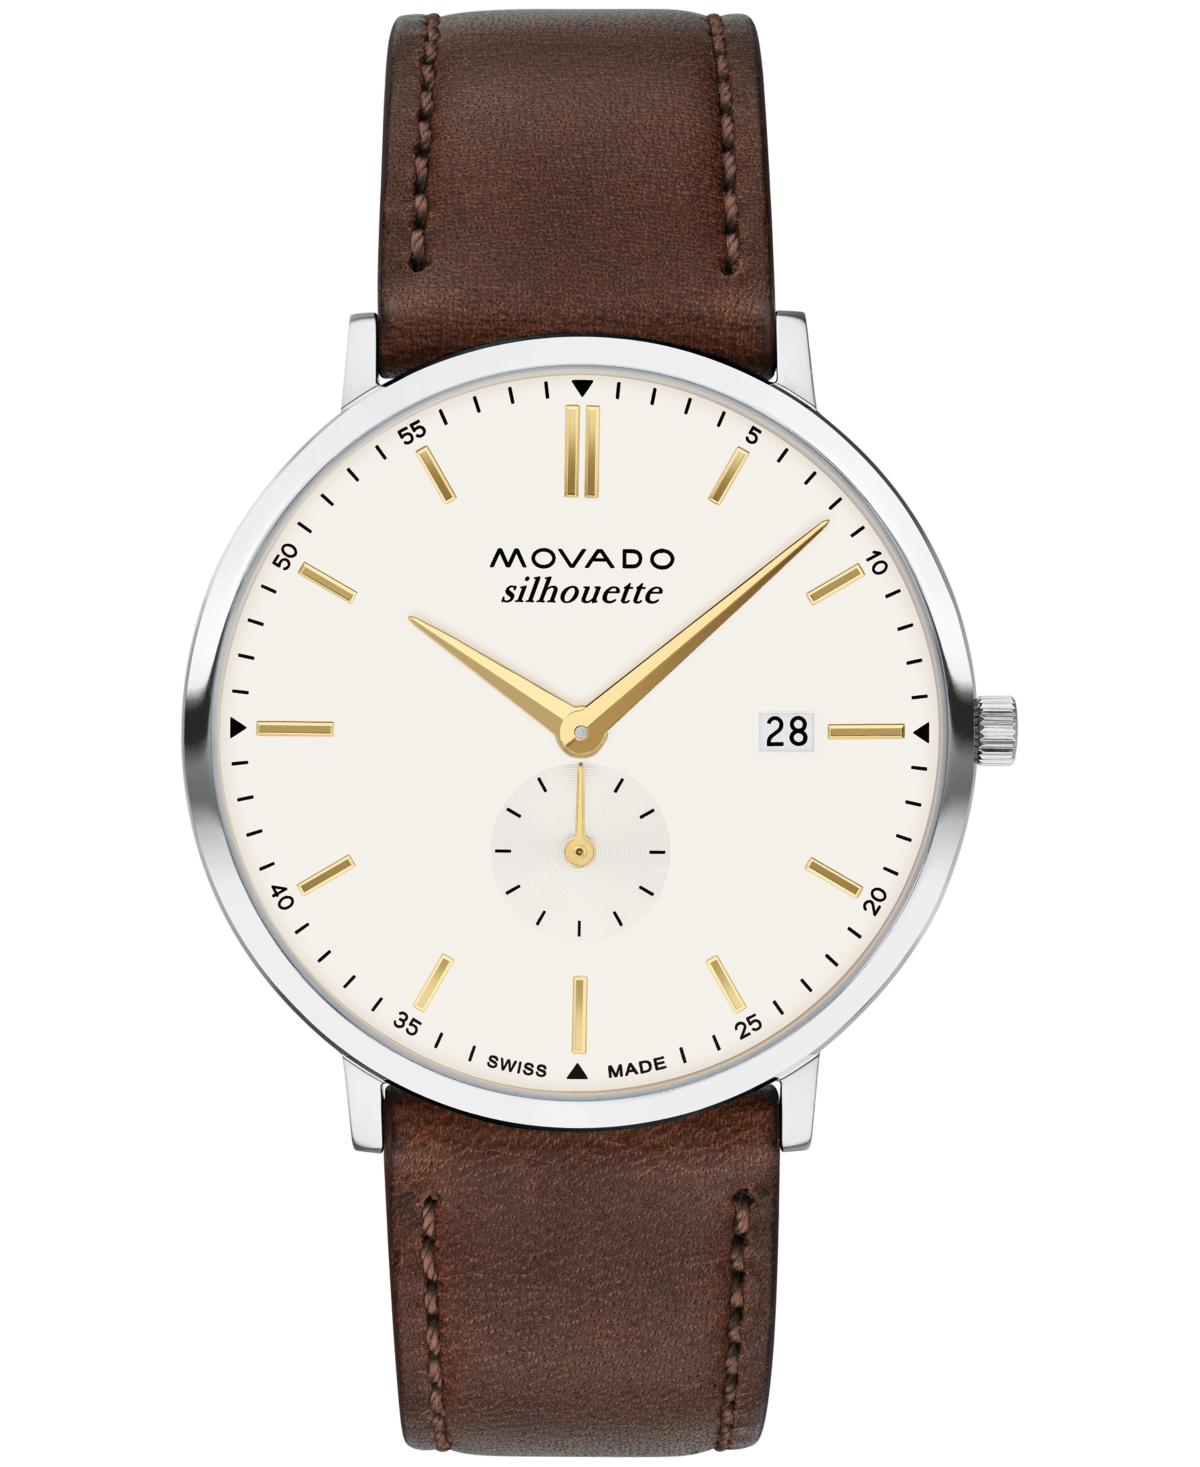 Movado Men's Silhouette Swiss Quartz Chocolate Brown Leather Watch 40mm